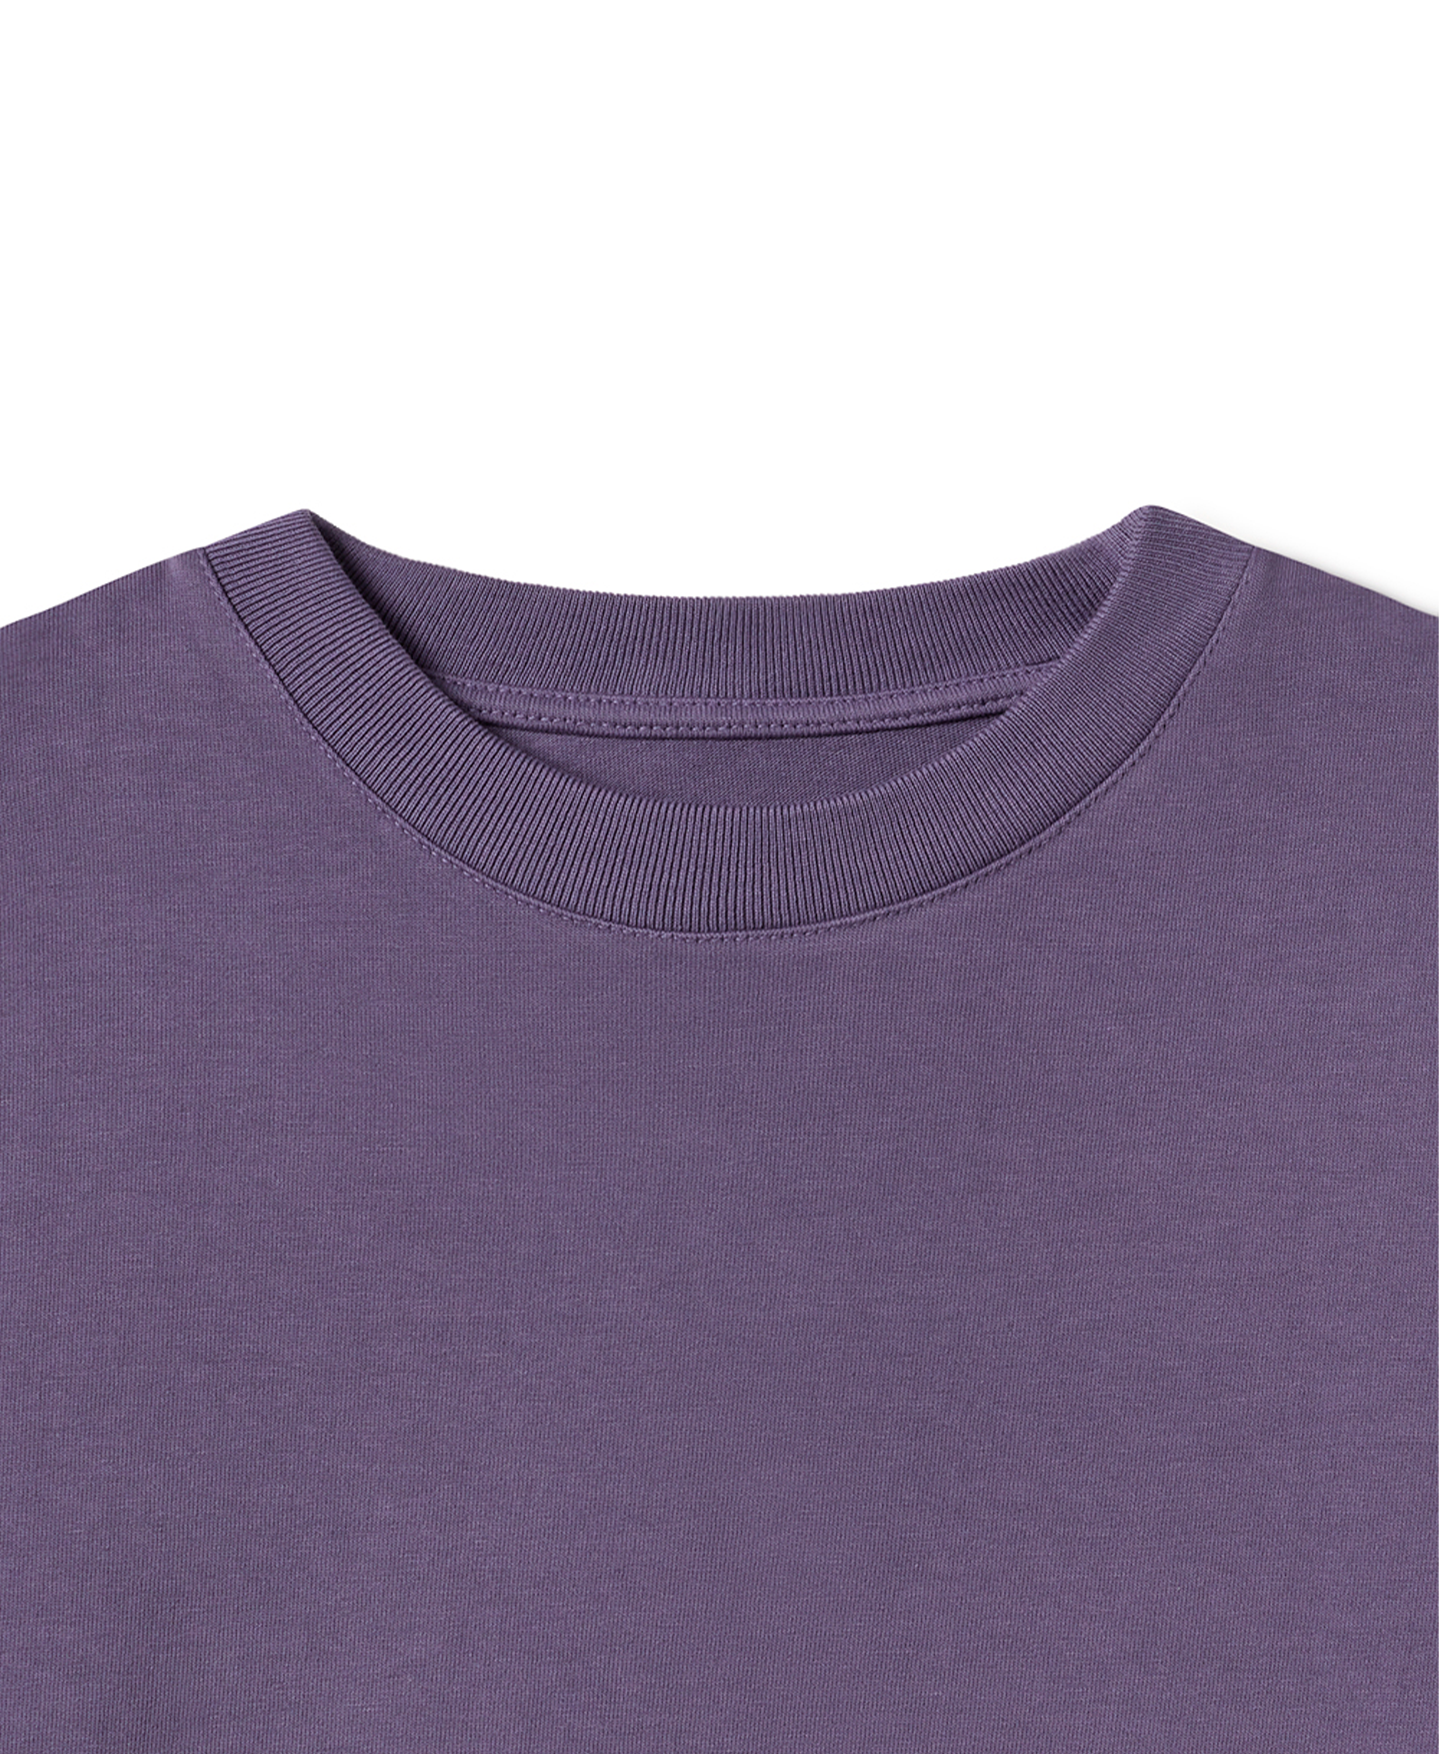 300 GSM 'Midnight Purple' T-Shirt